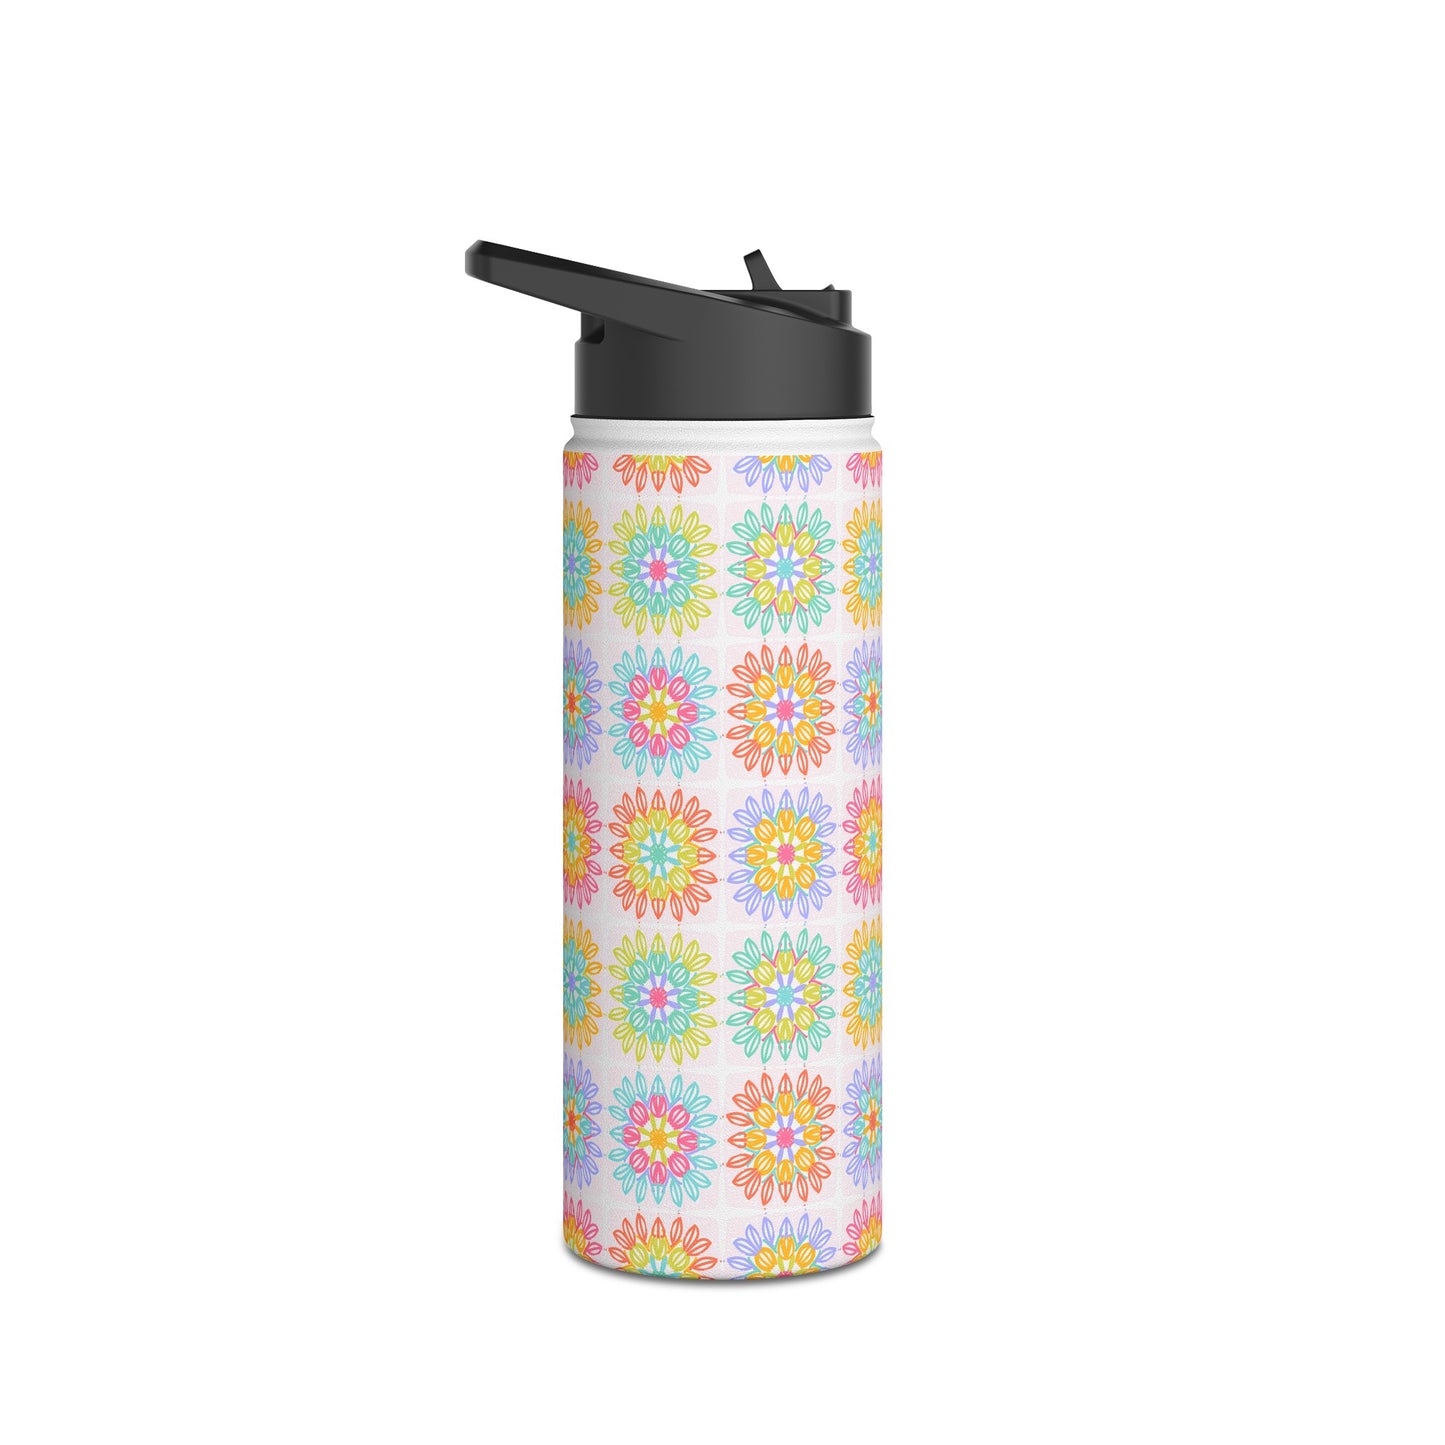 Granny Square in Summer Lovin’ | Stainless Steel Water Bottle, Standard Lid | Crochet | Knit | Craft